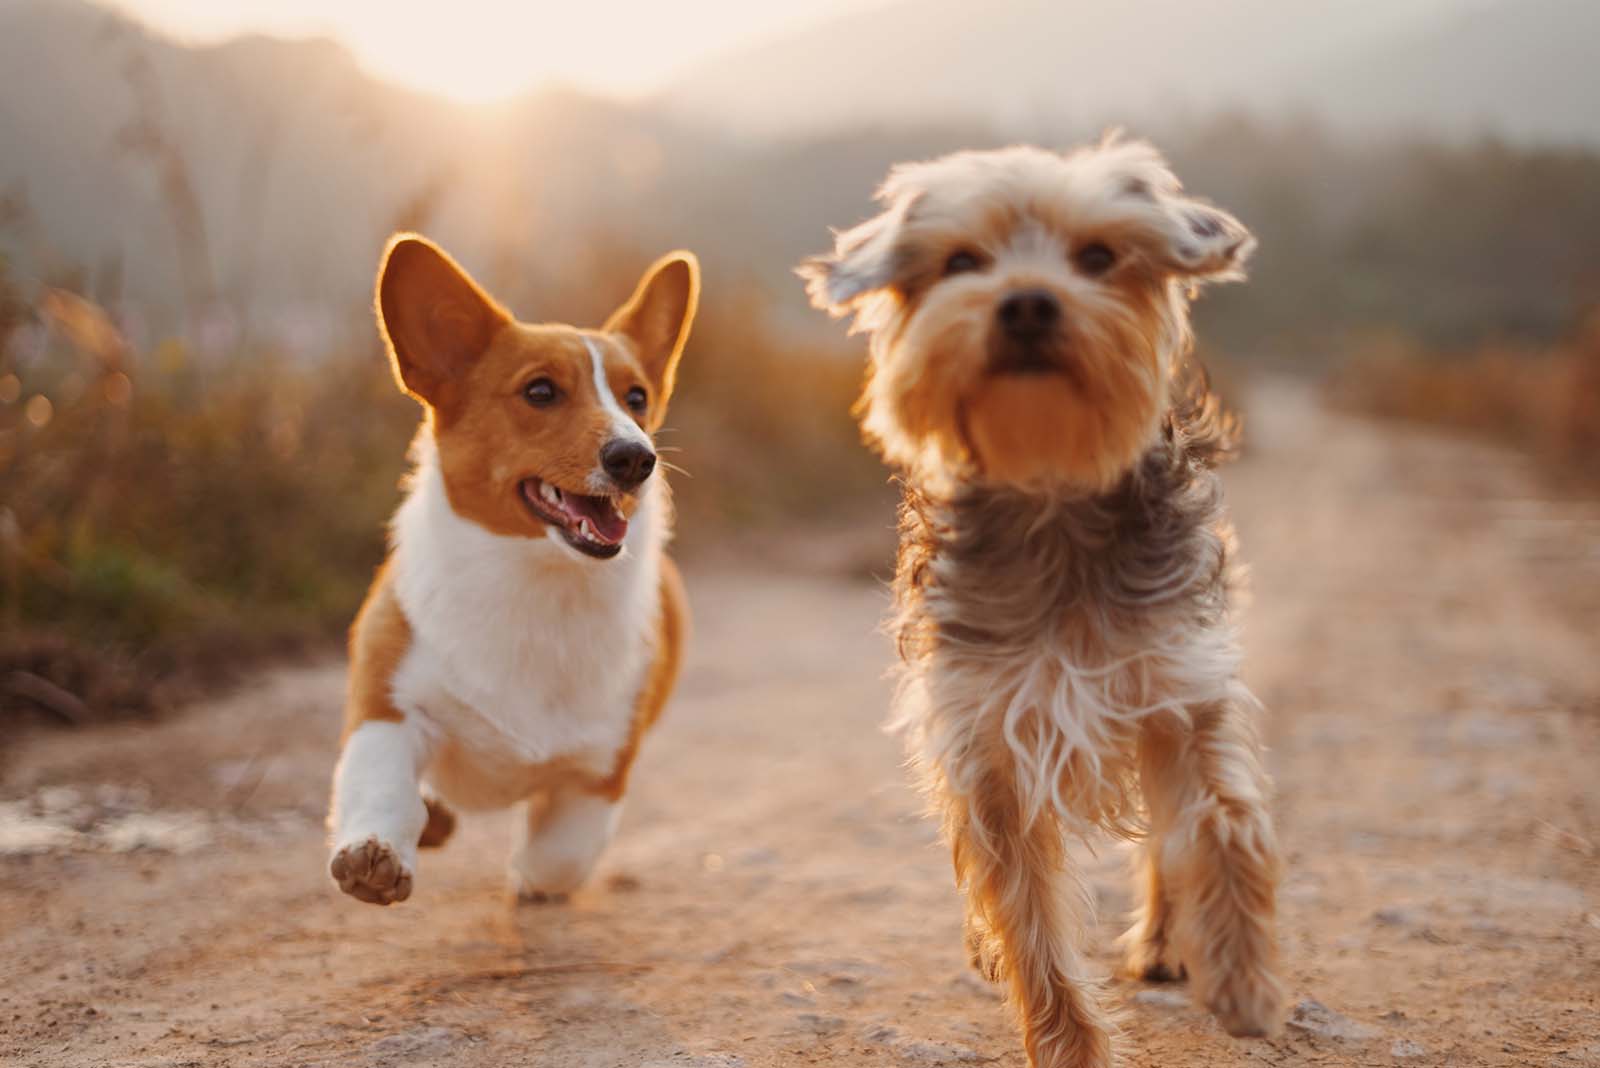 Two dog running